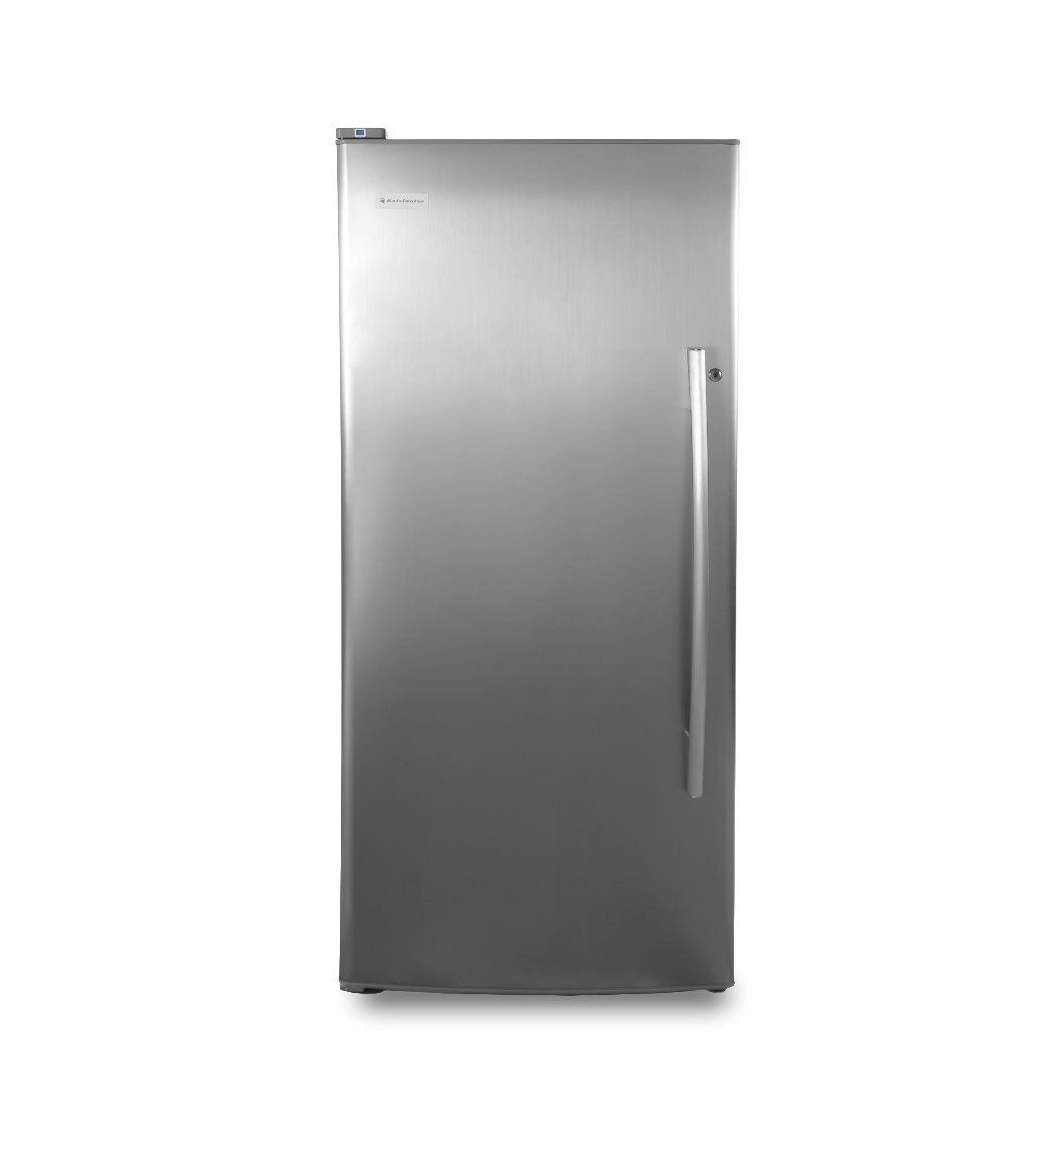 KELVINATOR Vertical Freezer 23 Feet, 650 Liter, National Industry, Silver - KLAF675B-E20A